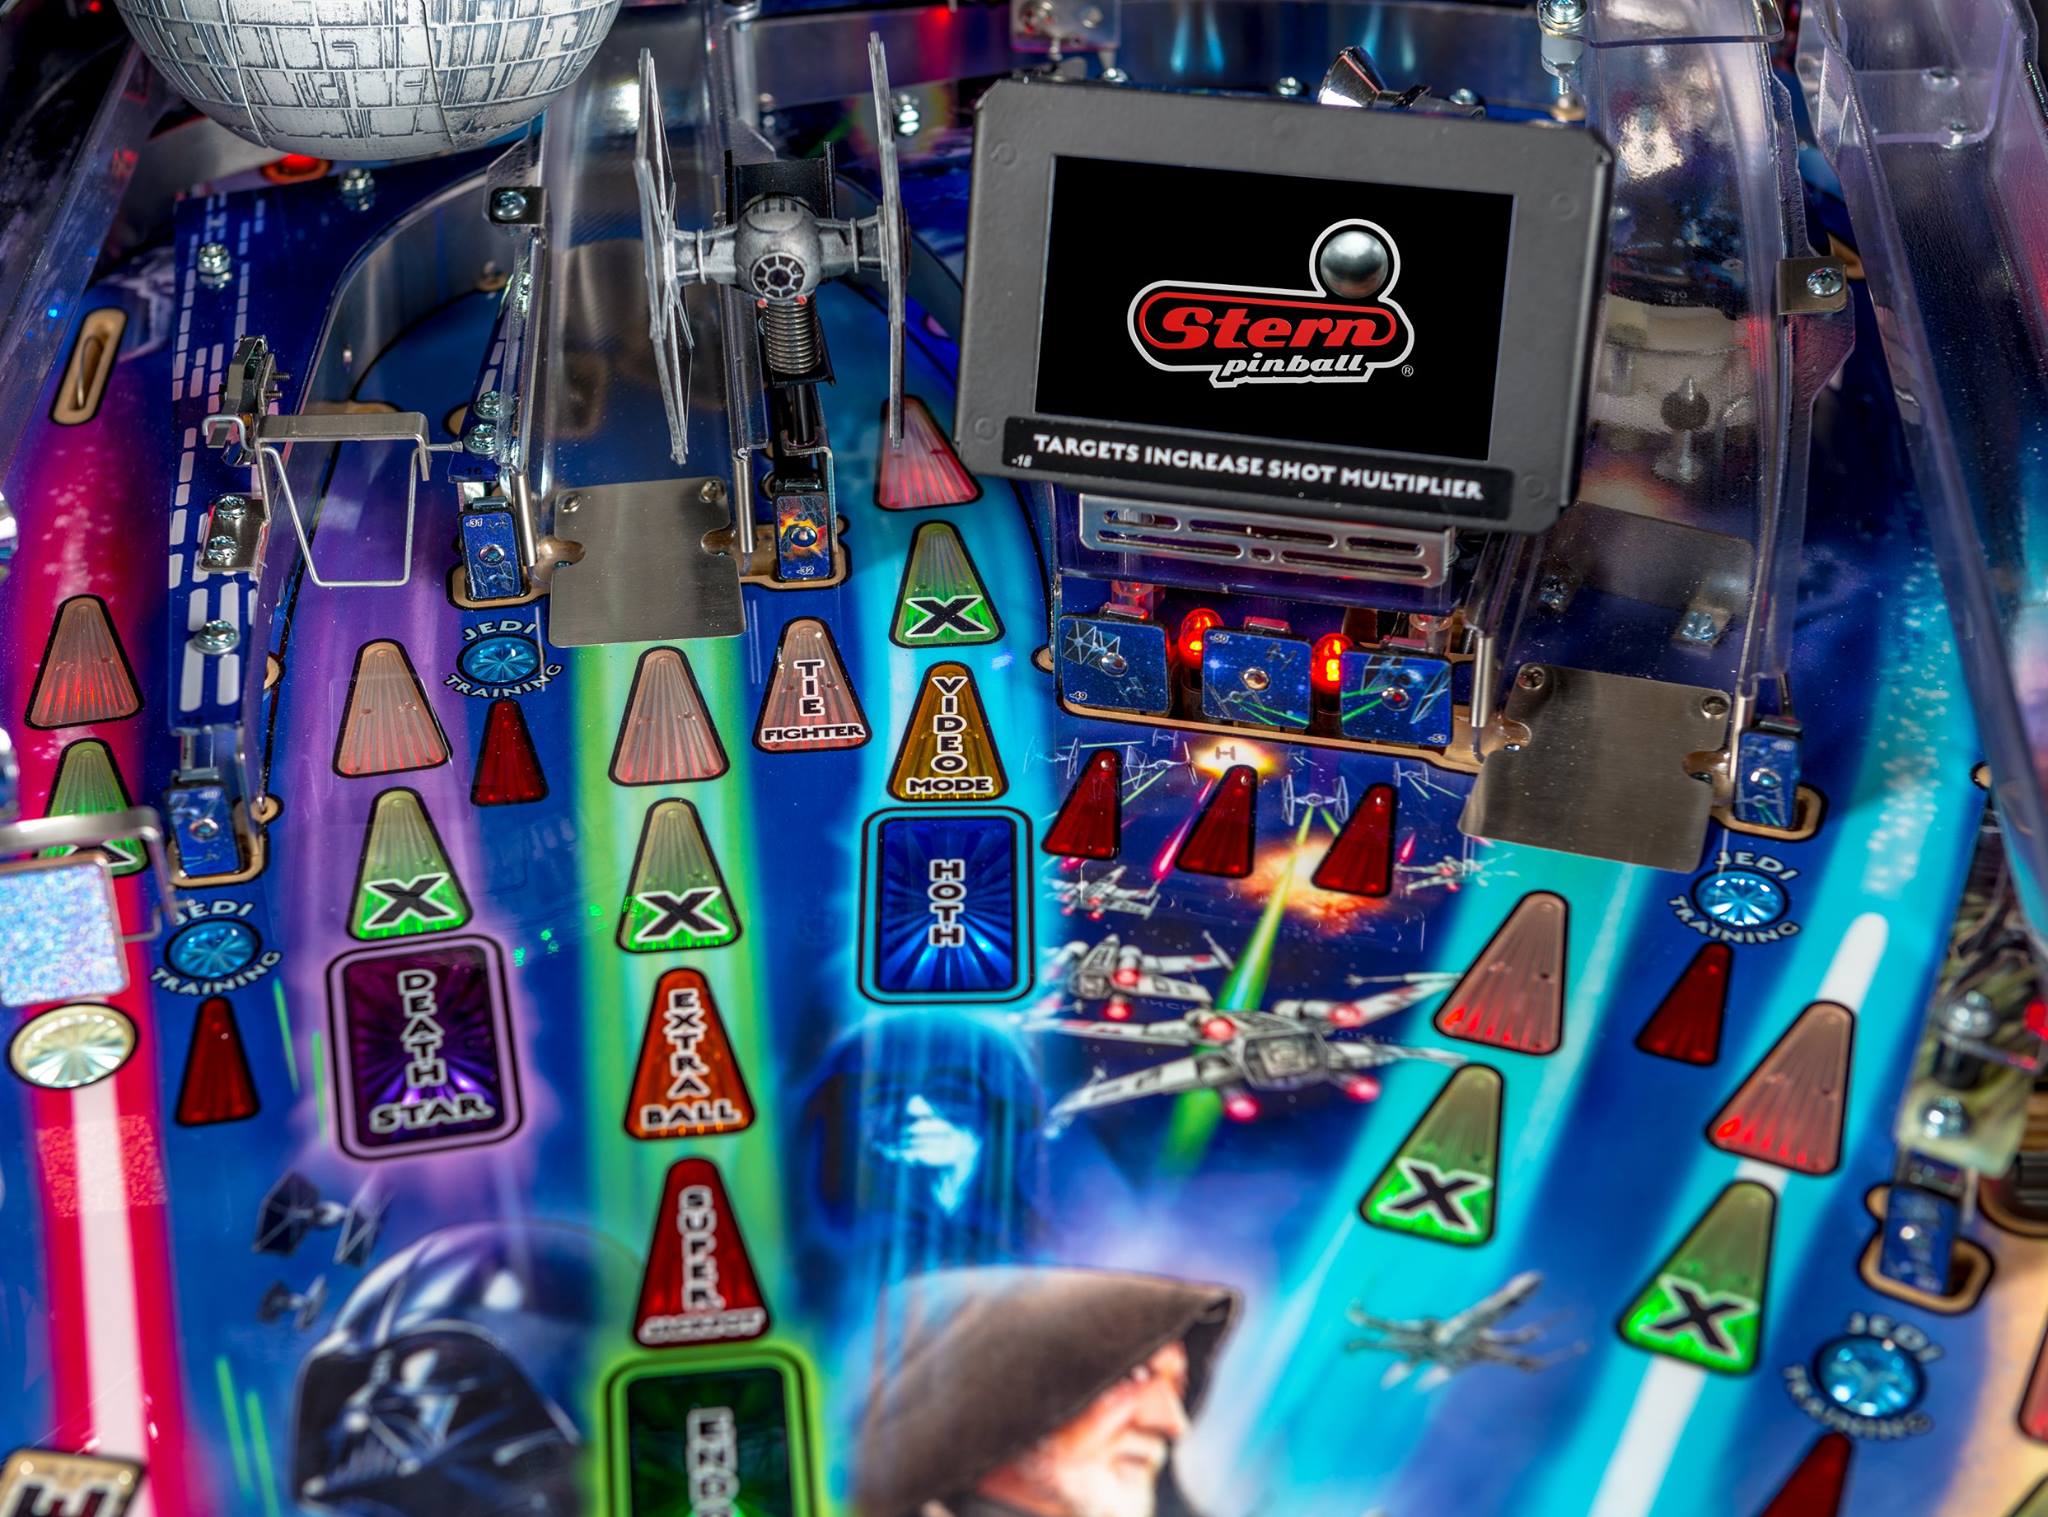 Star Wars Pro Pinball Machine: Playfield Screen